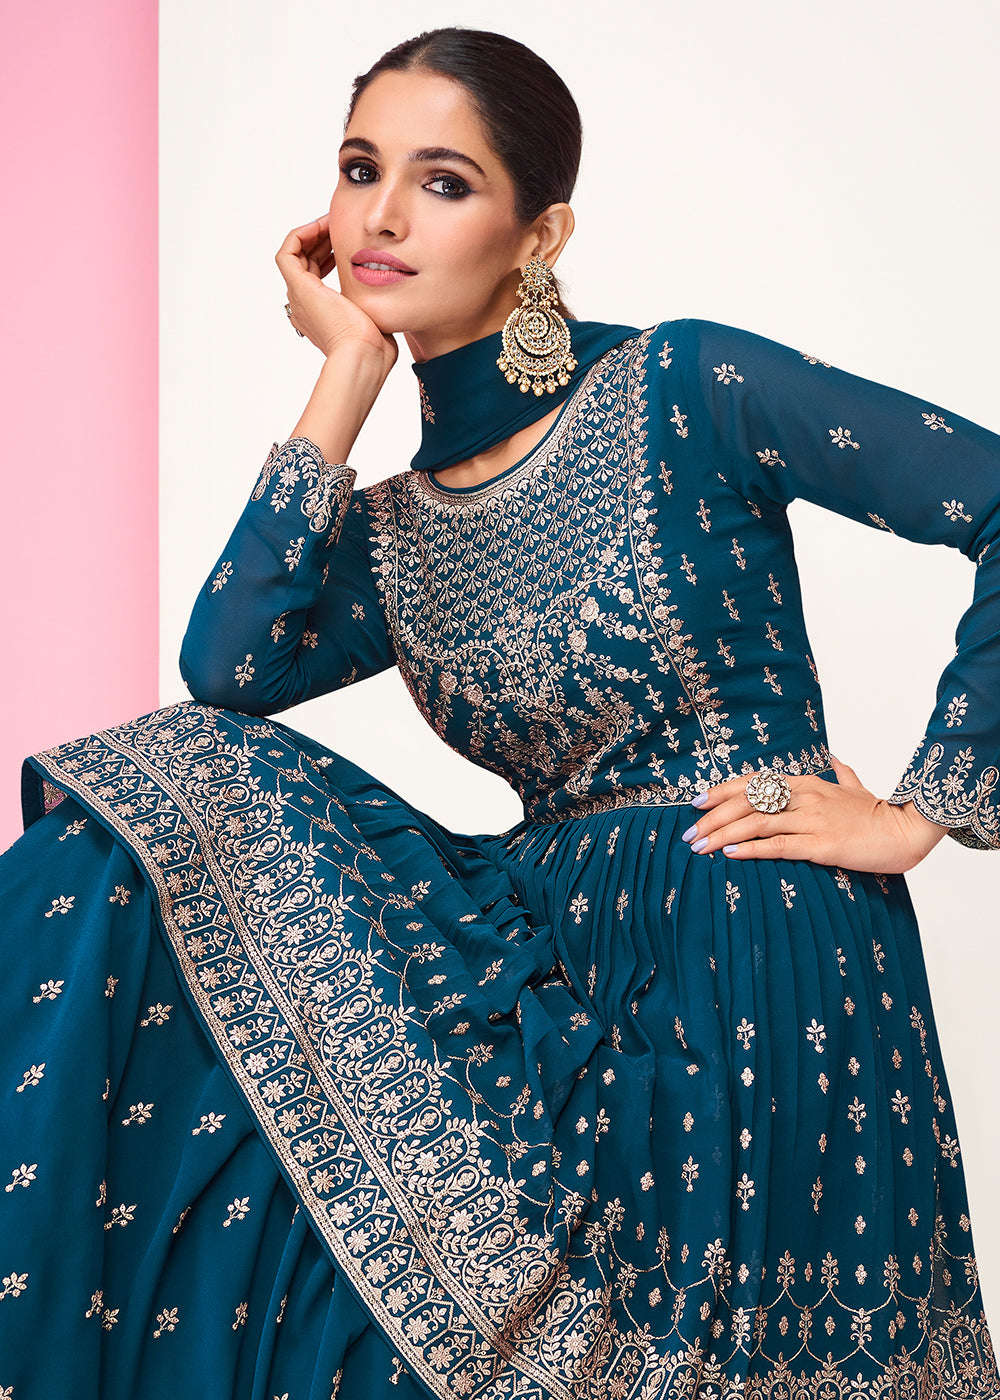 Buy Now Peacock Blue Sharara Top Style Lehenga Anarkali Online in USA, UK, Australia, New Zealand, Canada & Worldwide at Empress Clothing.